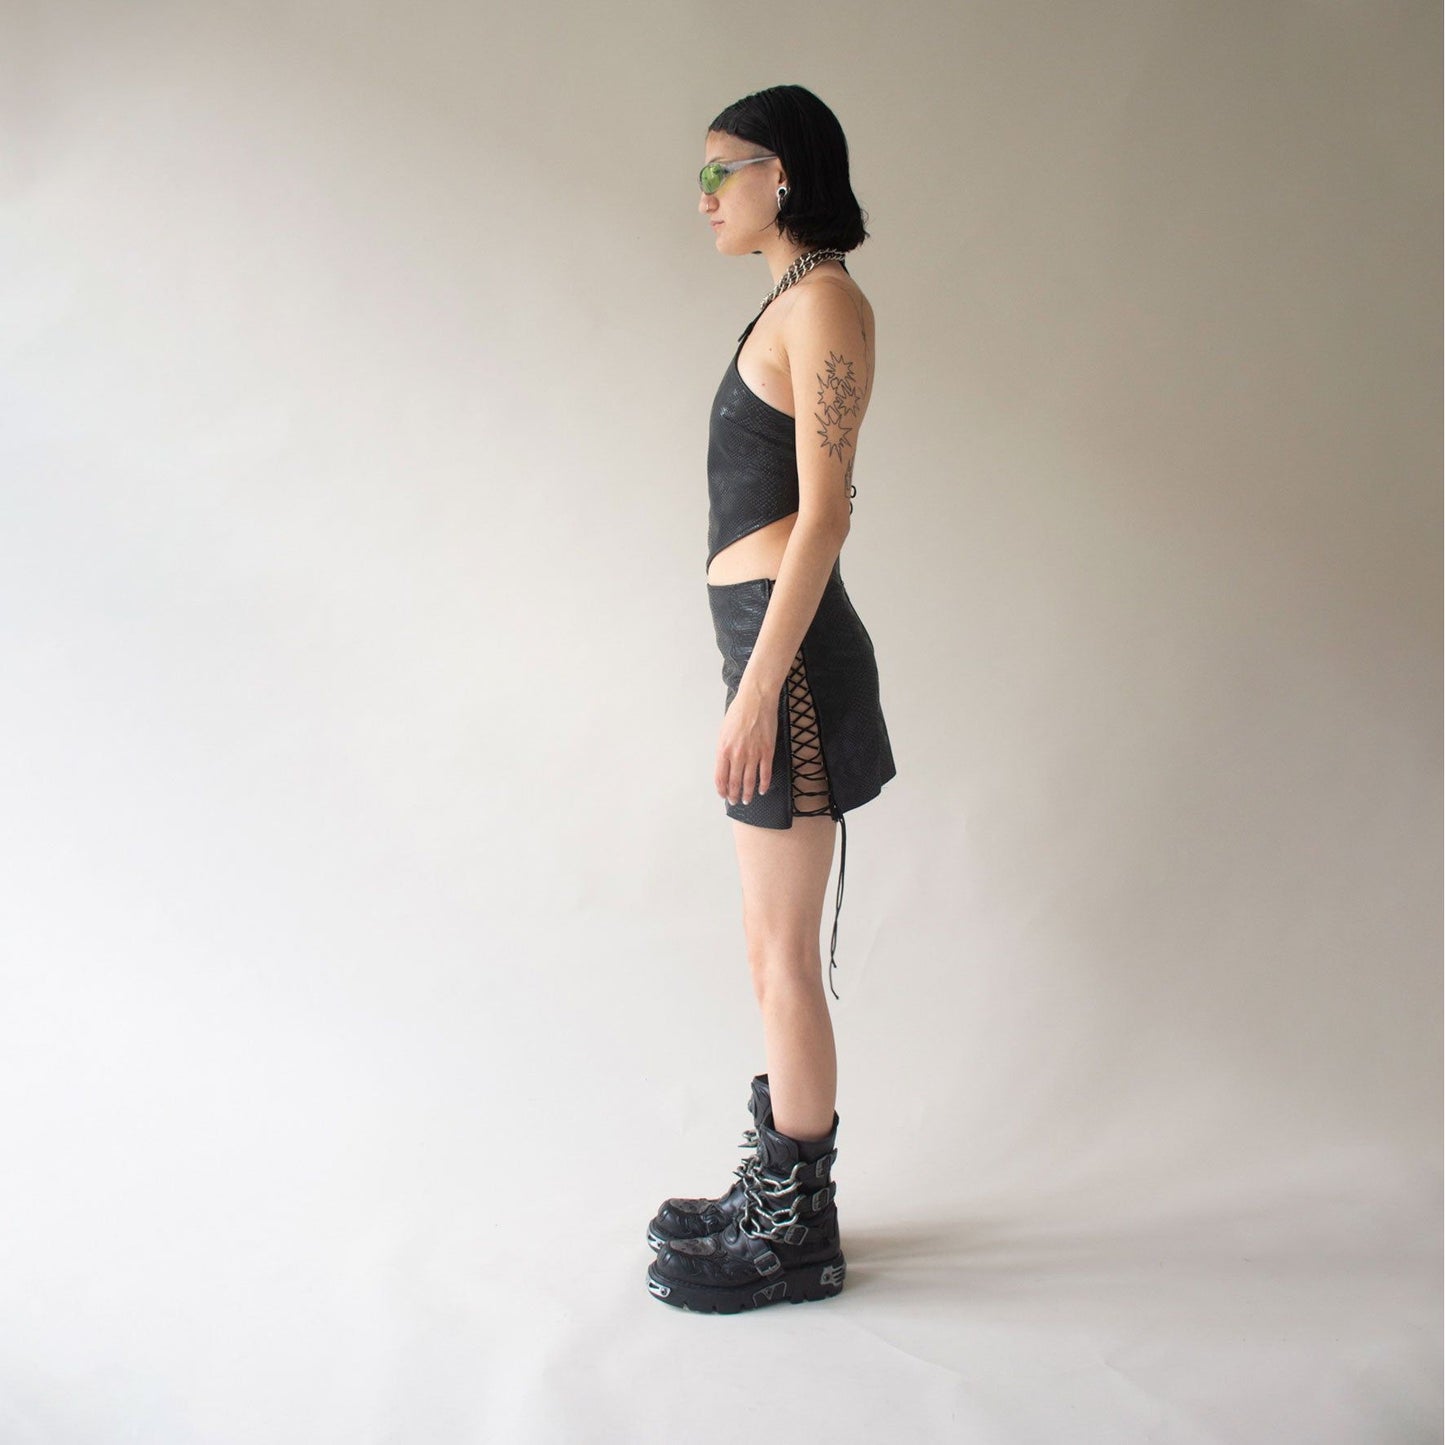 Black pvc skirt with black snake pattern